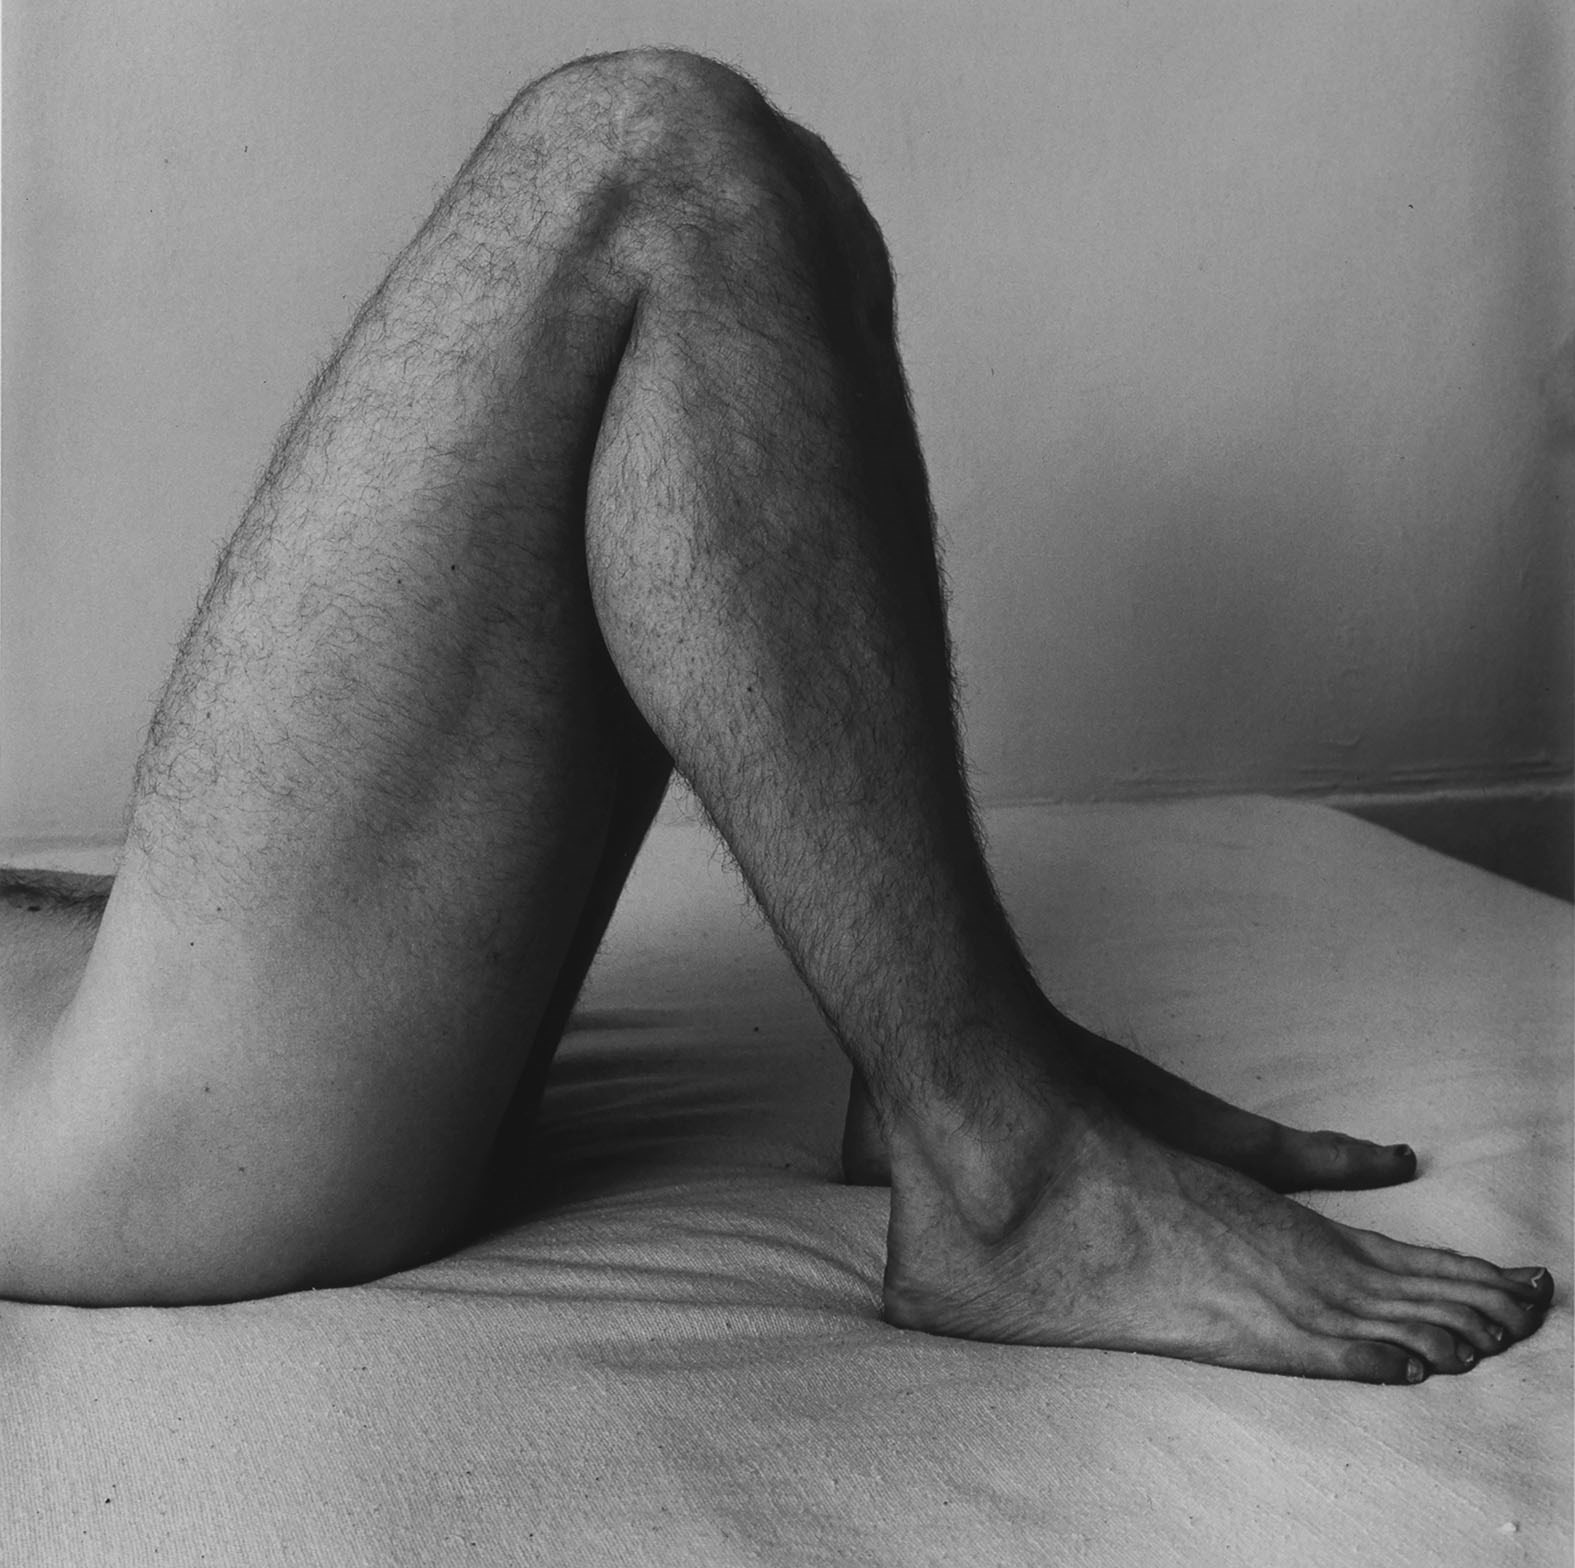 Peter Hujar, “Paul’s Legs” (1979) from The Shabbiness of Beauty by Moyra Davey & Peter Hujar (MACK, 2021)